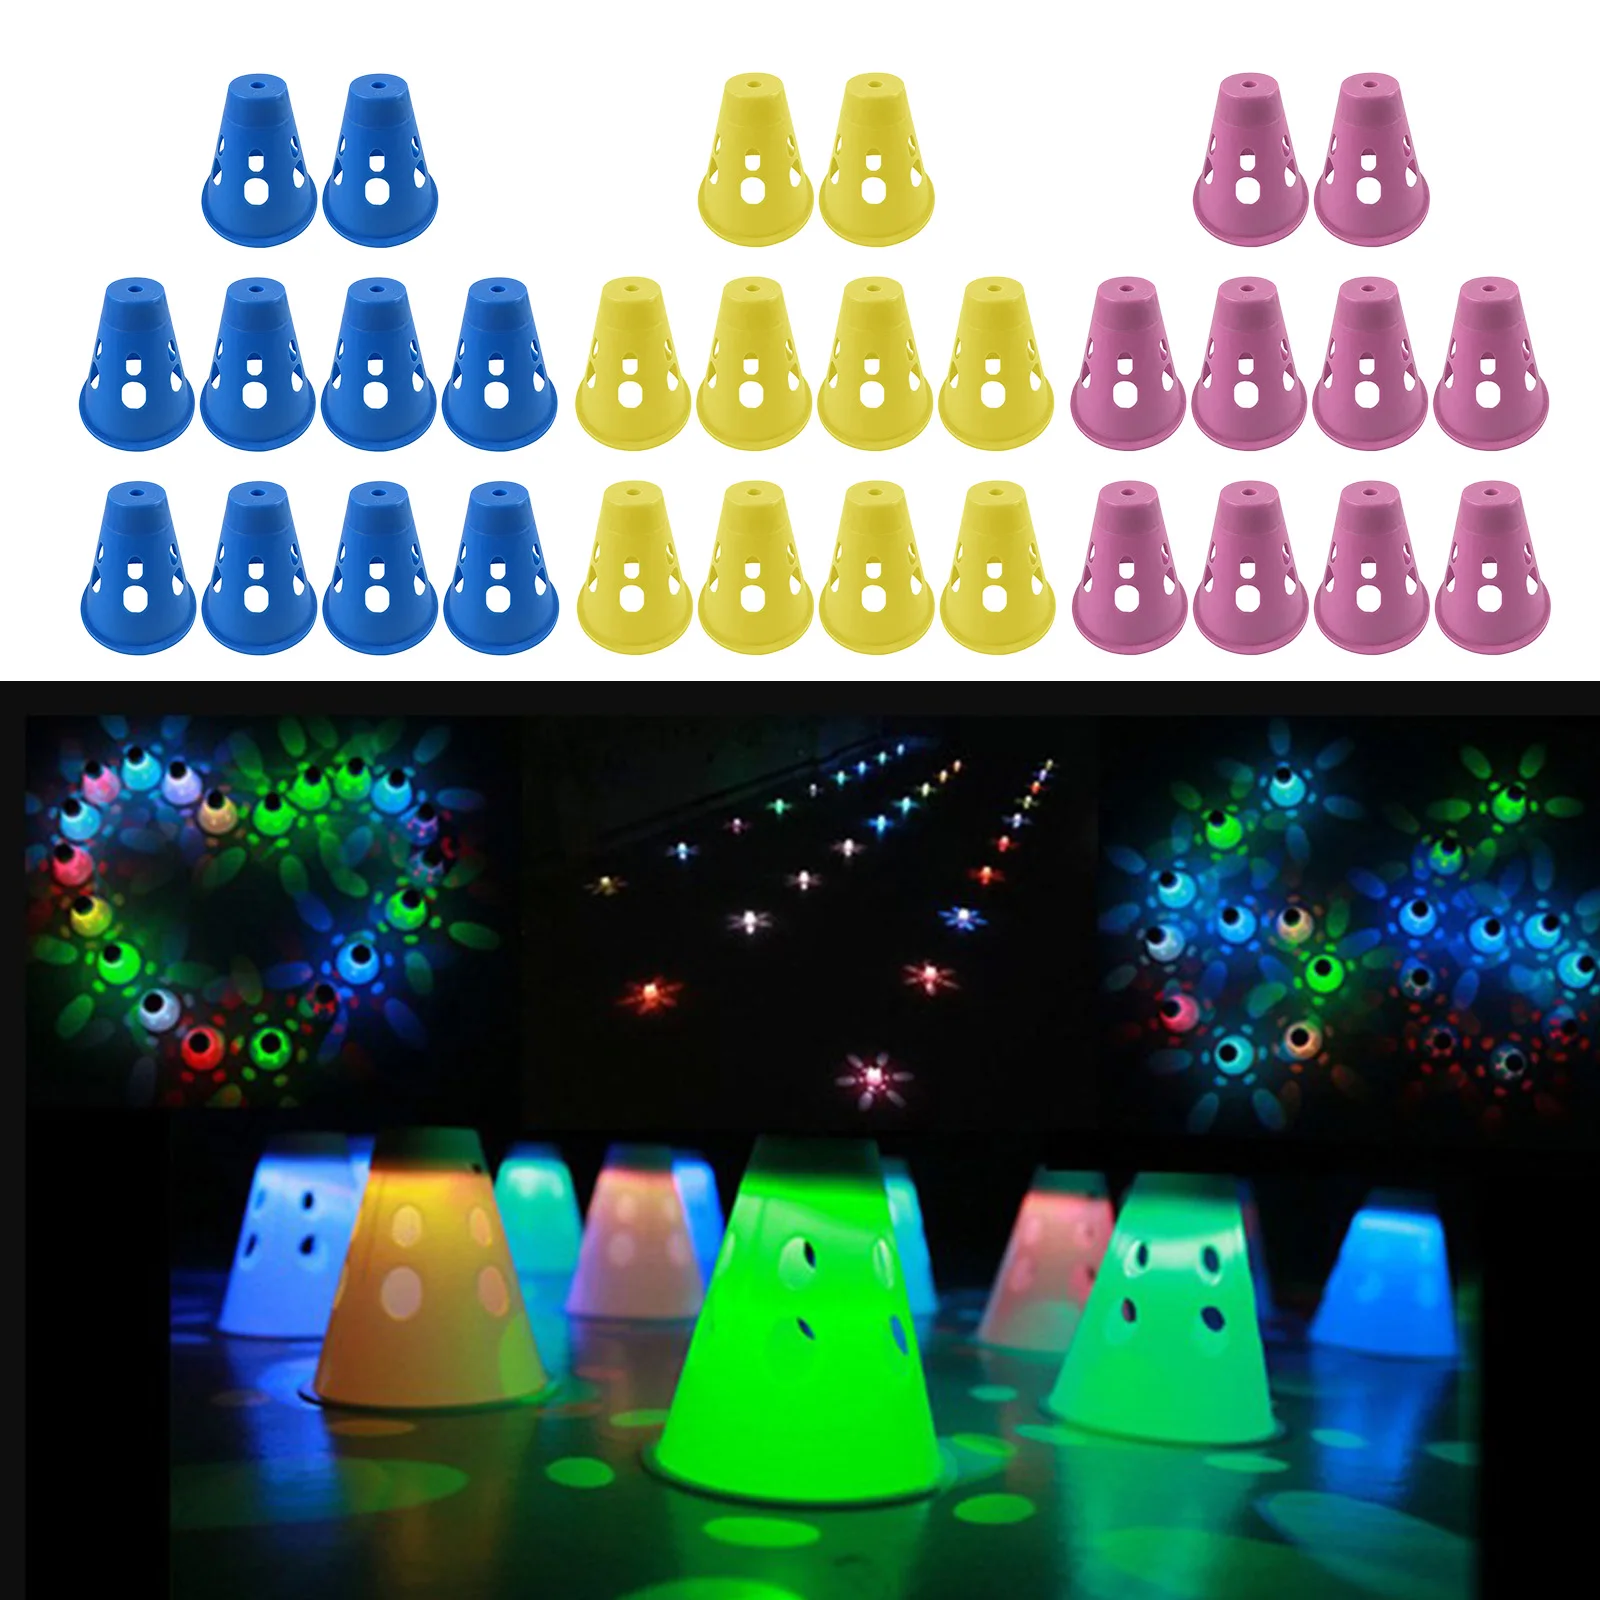 10pcs 7.8x8cm Plastic LED Skating Cones Light Up Ground Light